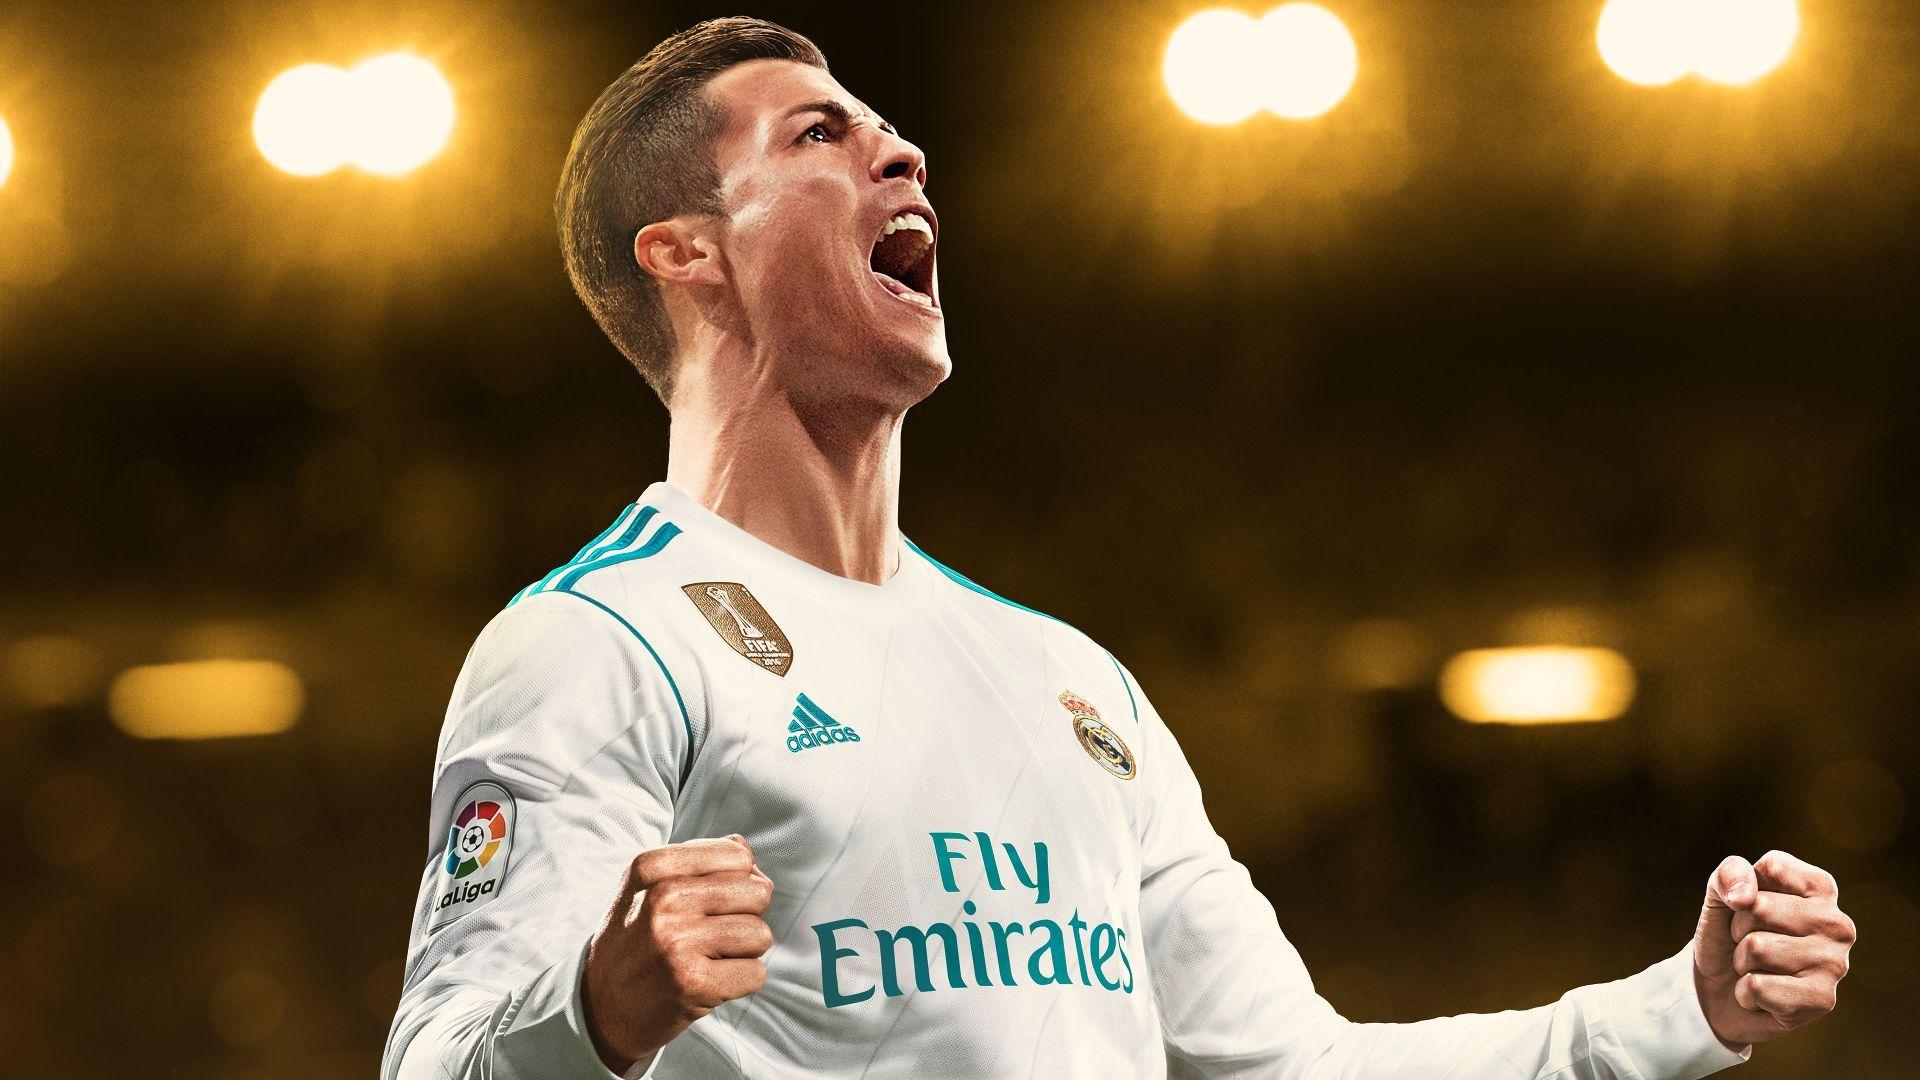 FIFA 18 Ronaldo Edition for PC